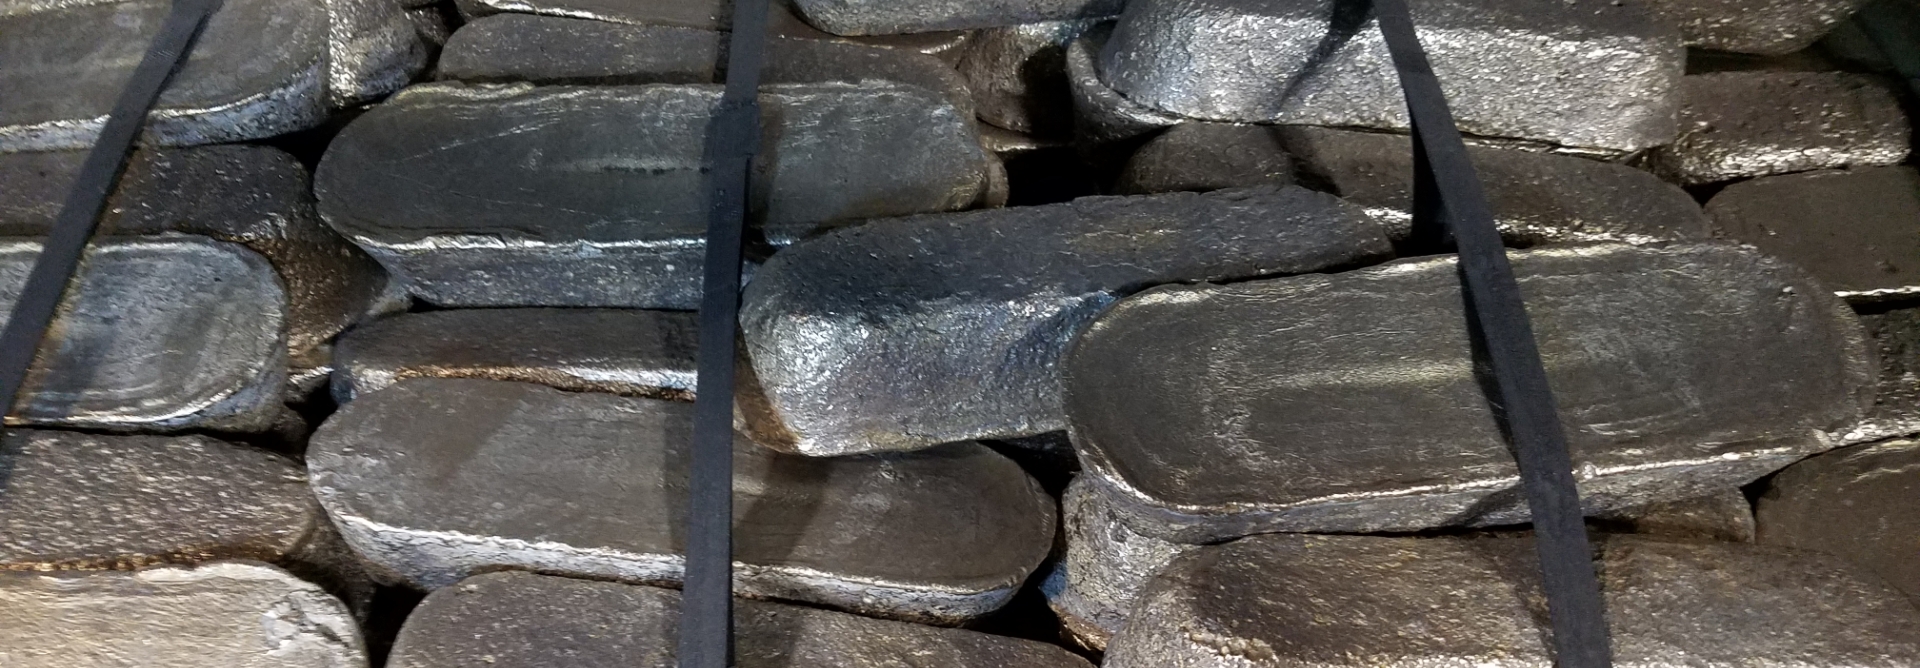 Blocks of aluminum alloys strapped into rows